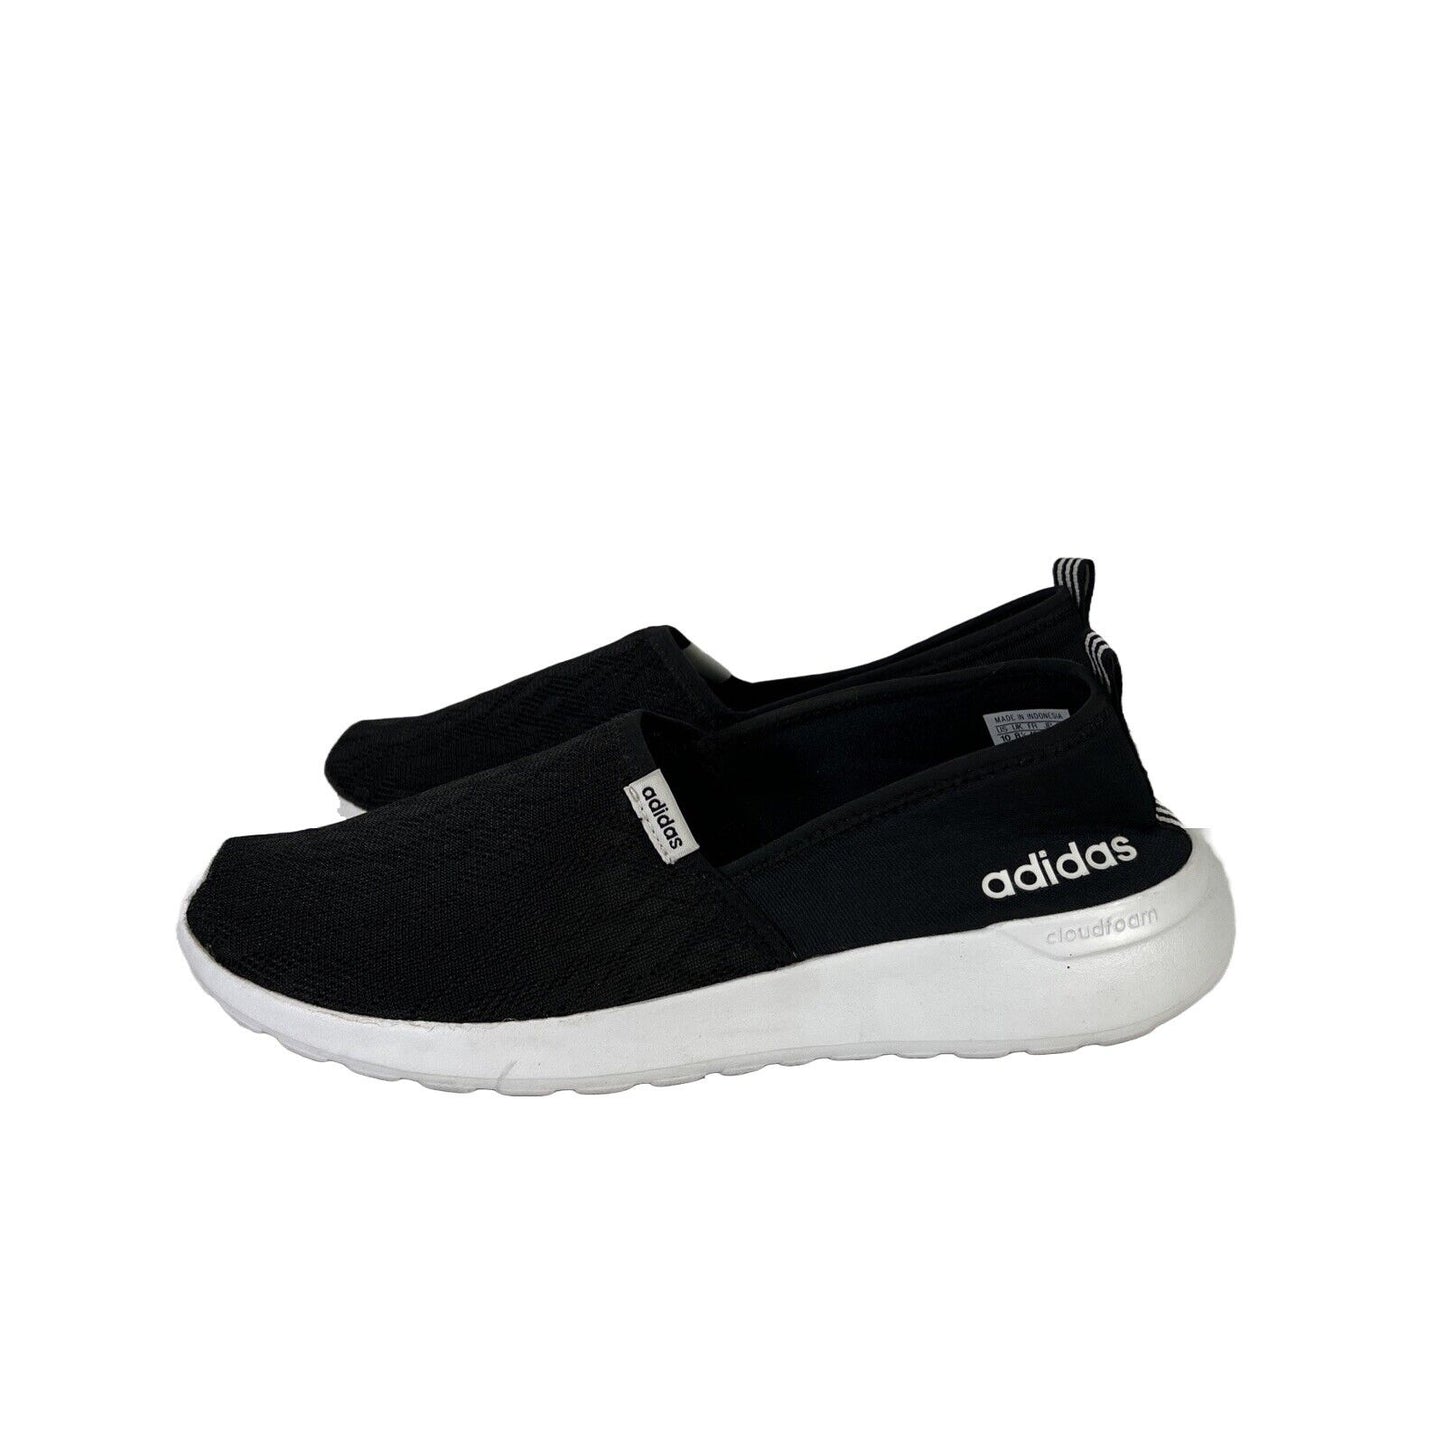 Adidas Women's Black Memory Foam Lite Racer Comfort Athletic Shoes - 10